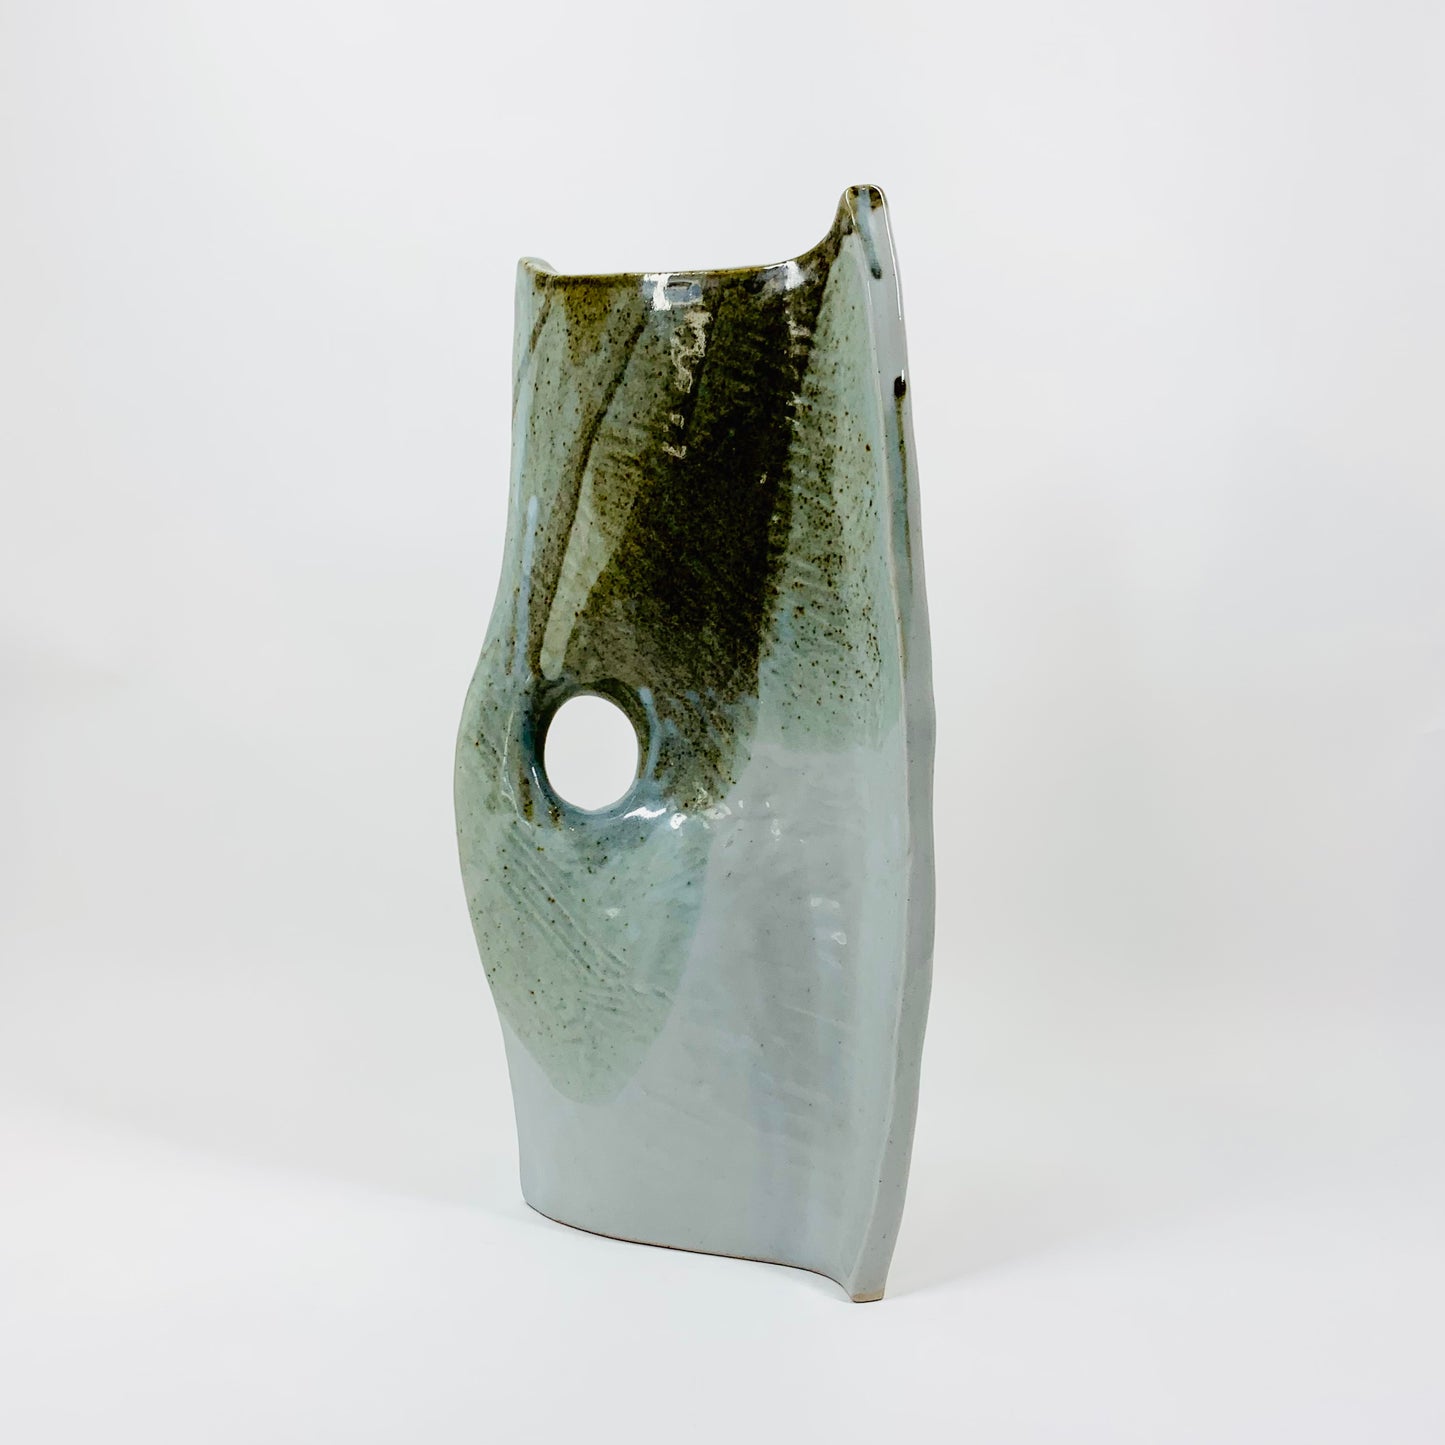 Extremely rare hand made Japanese Midcentury modernist pottery ikebana vessel